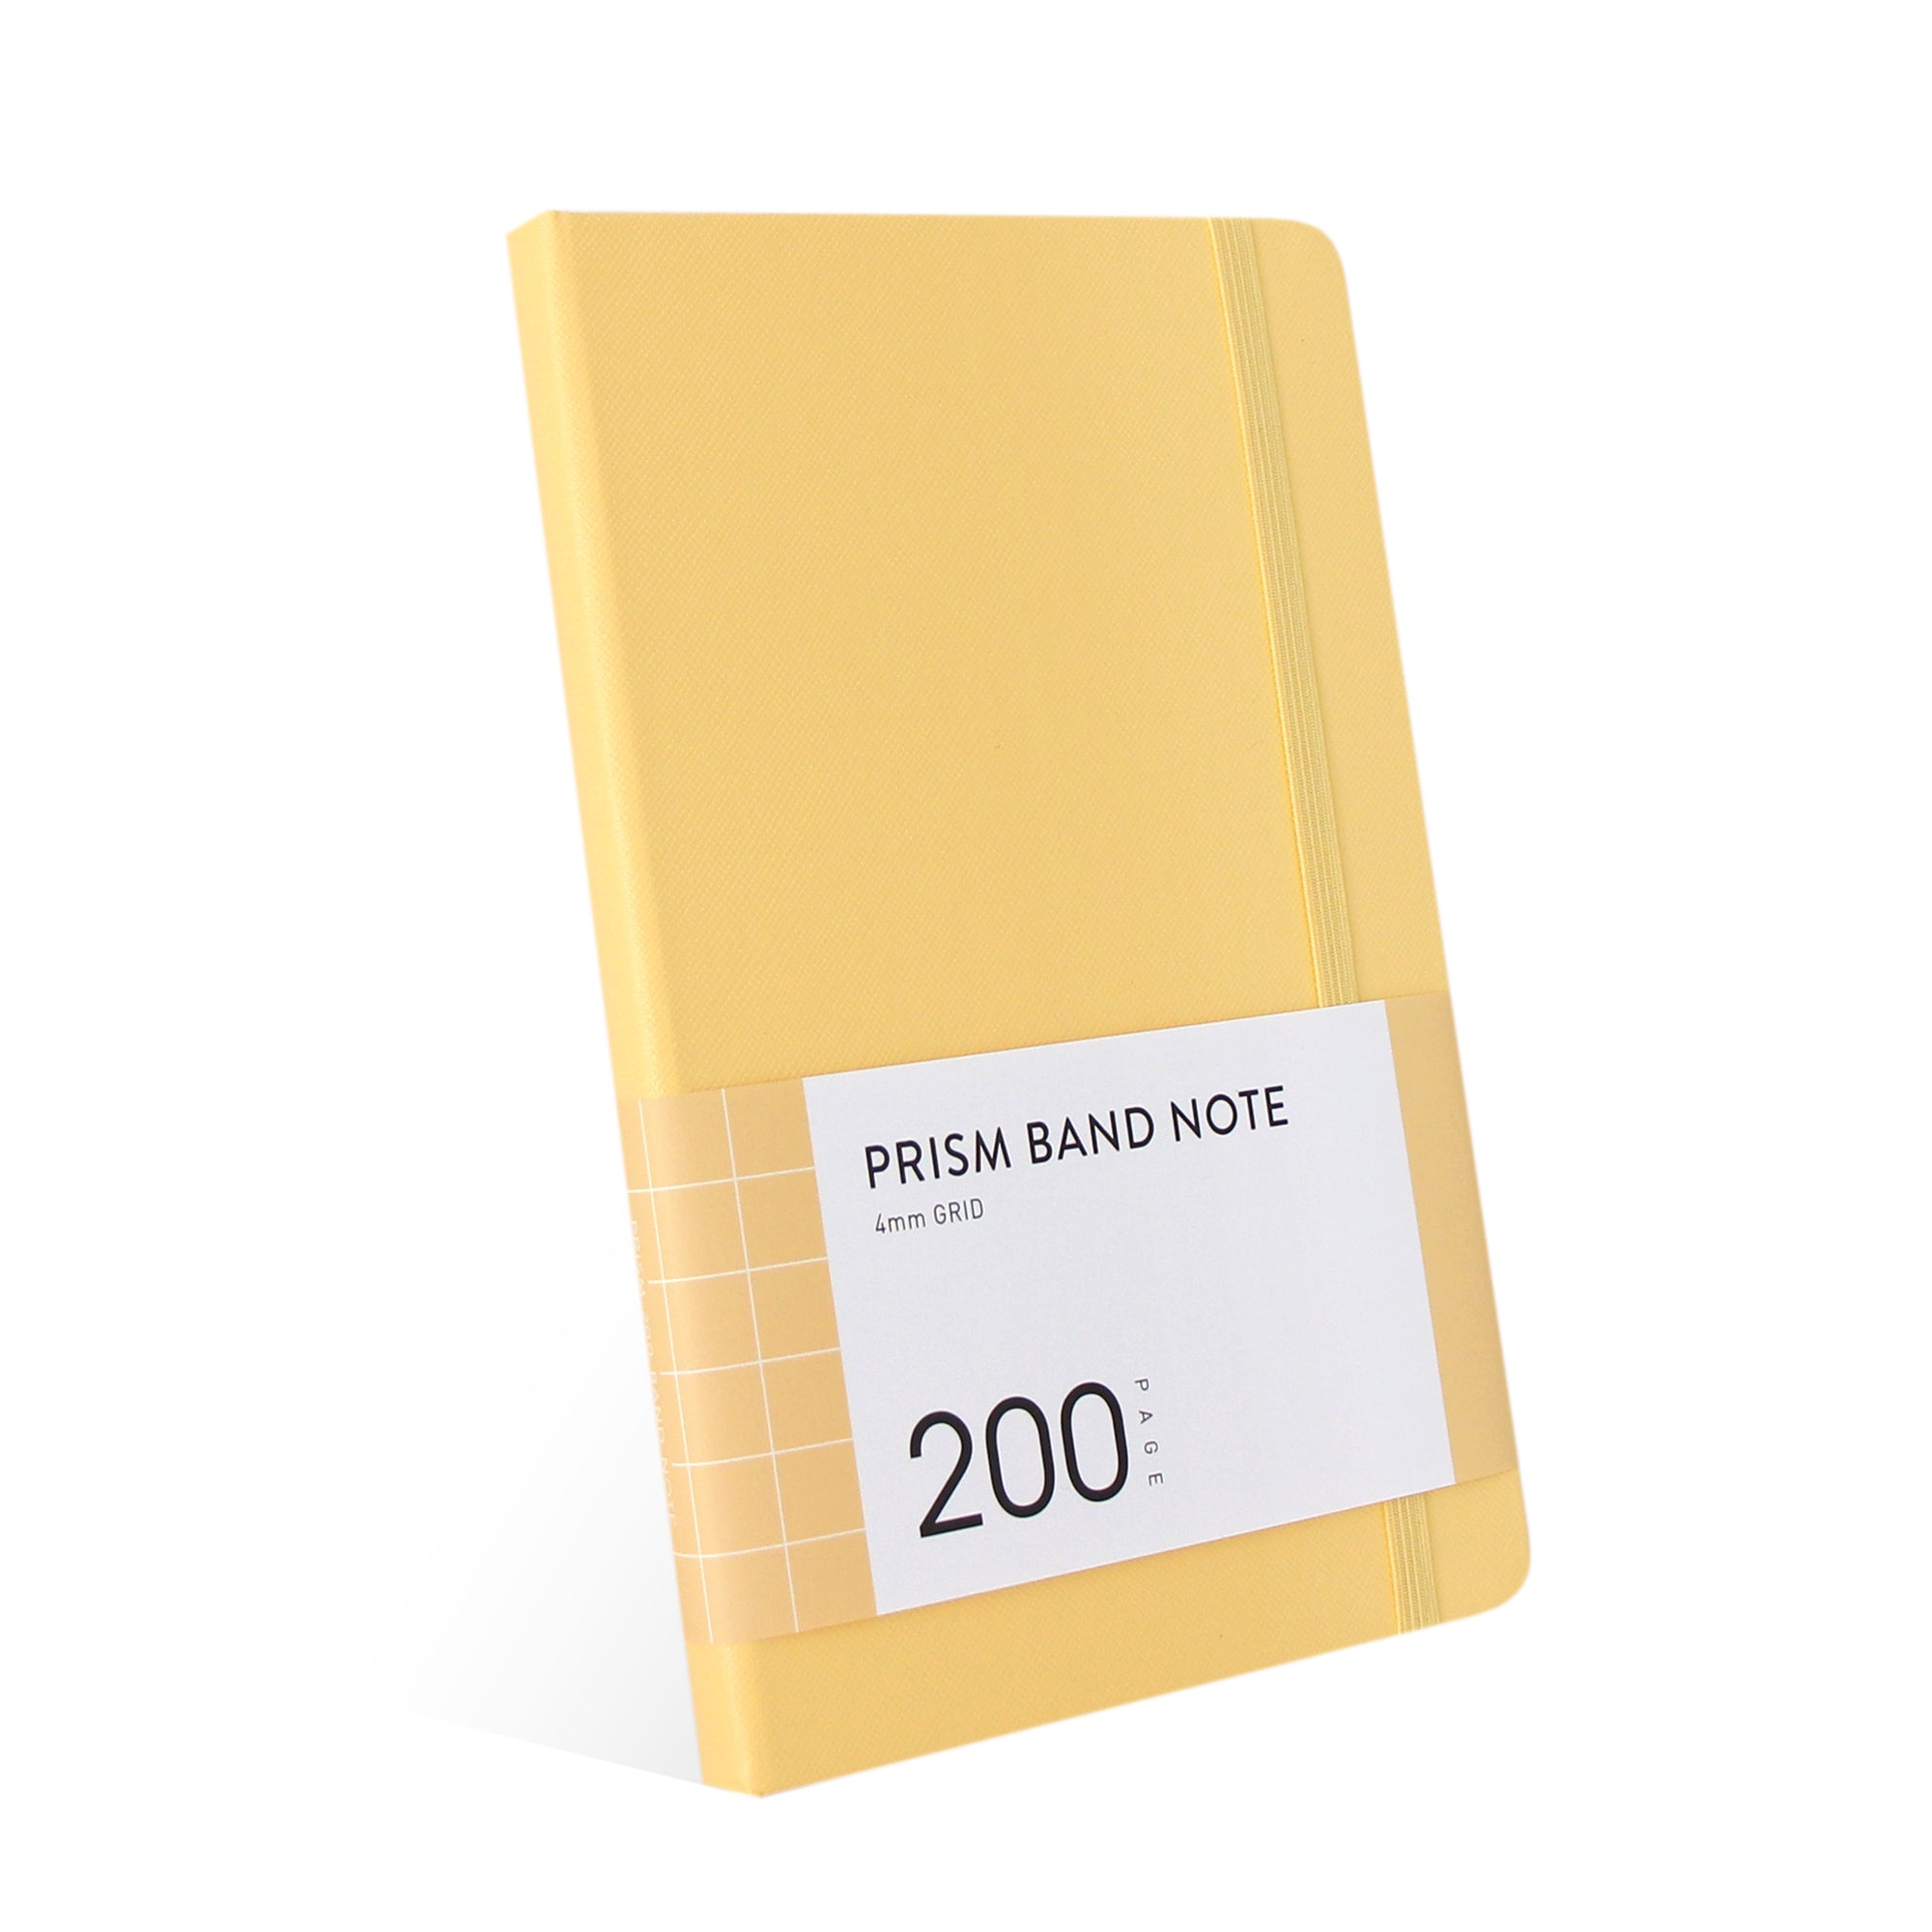 INDIGO Prism 200 Grid Band Note